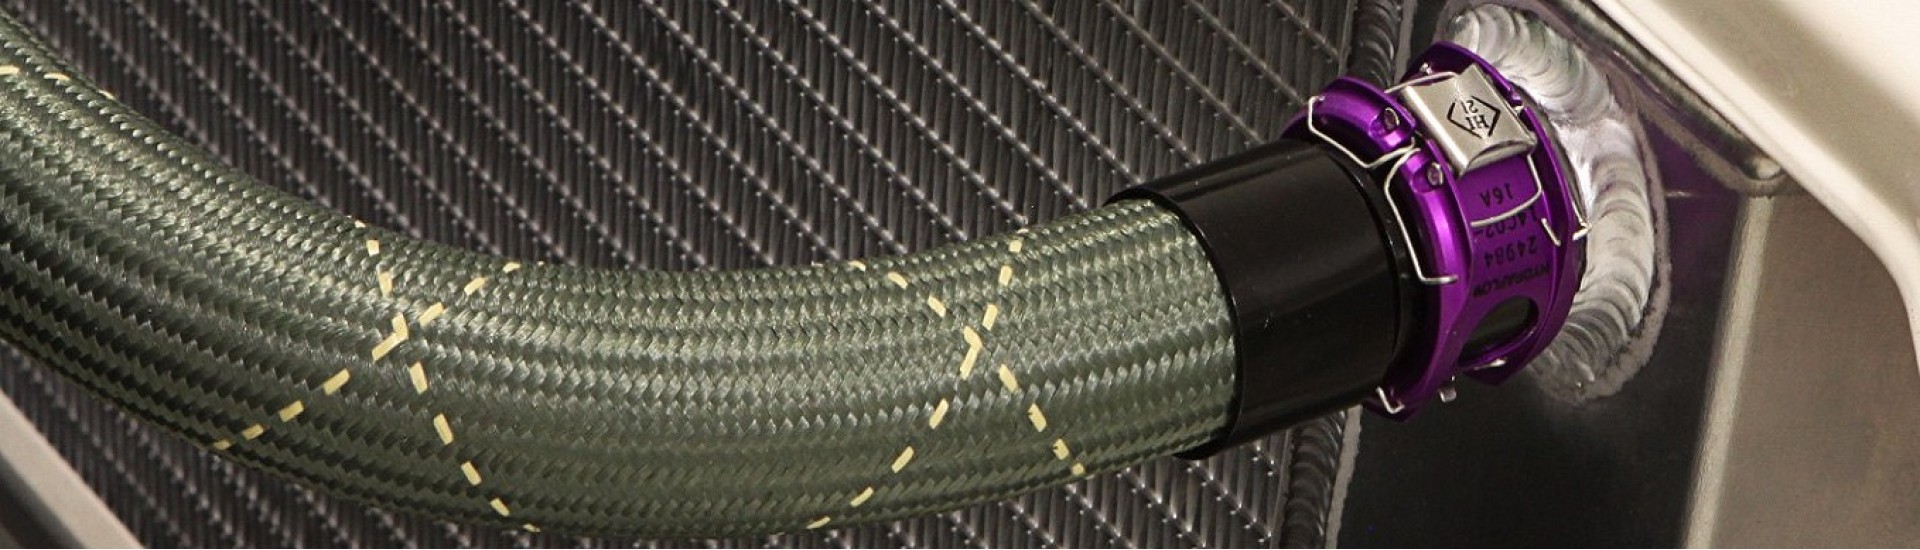 شیلنگ خنک کننده اسپرت مزدا 5 GT 2010 